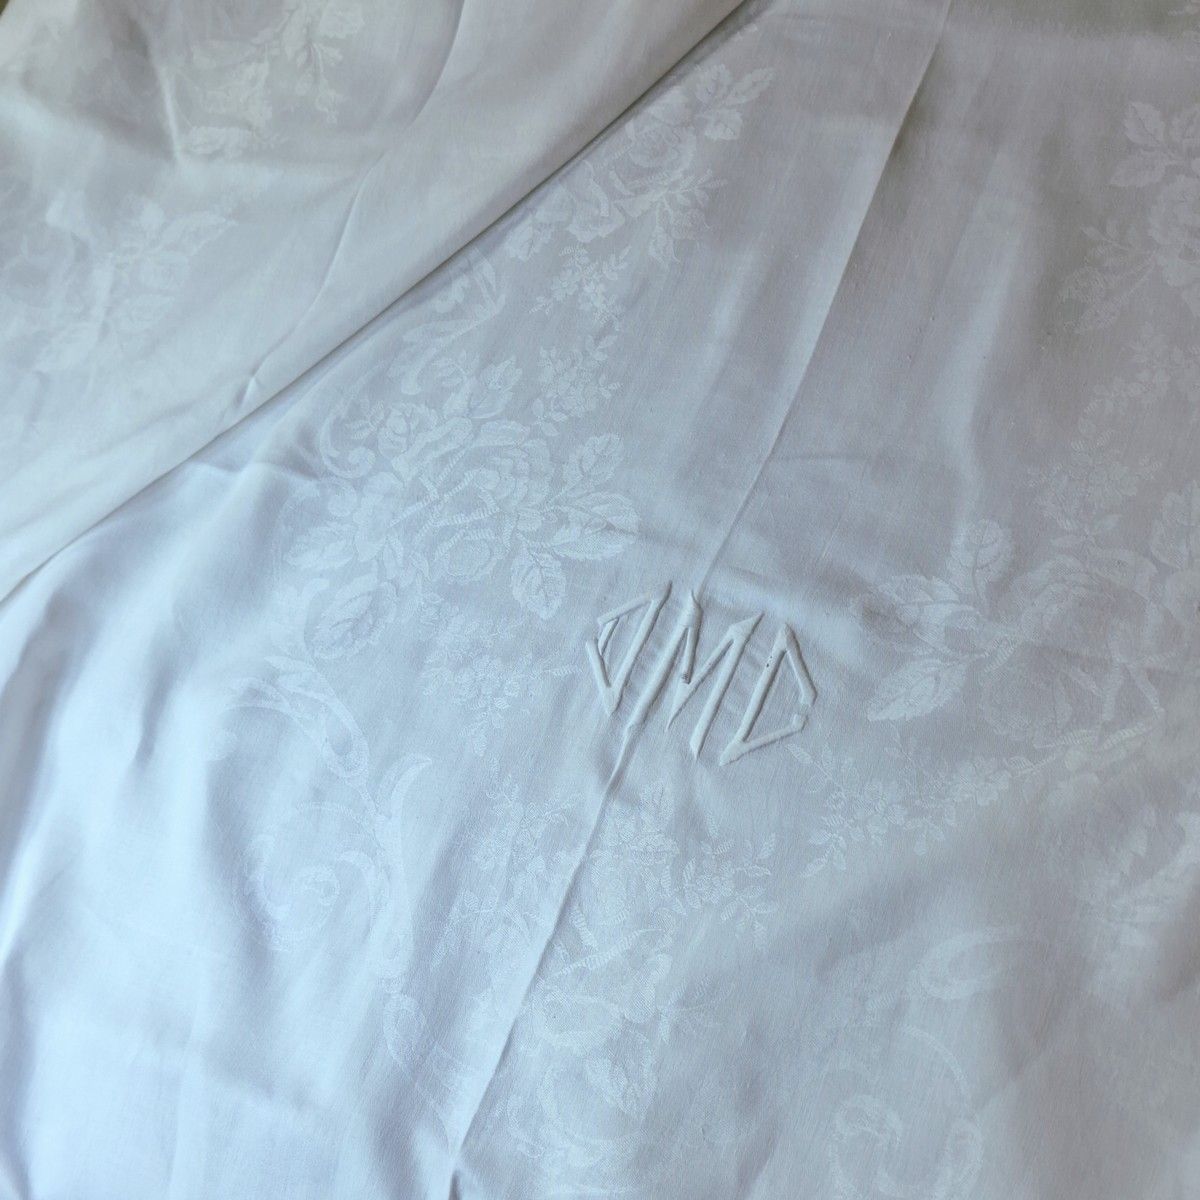 Null 装饰艺术时期的大型白色棉锦缎矩形床垫，在刺桐卷轴之间编织有玫瑰和玫瑰枝条装饰，用波顿针法绣有两个白色三重 DMC 字母。
344 x 170 厘米
B&hellip;